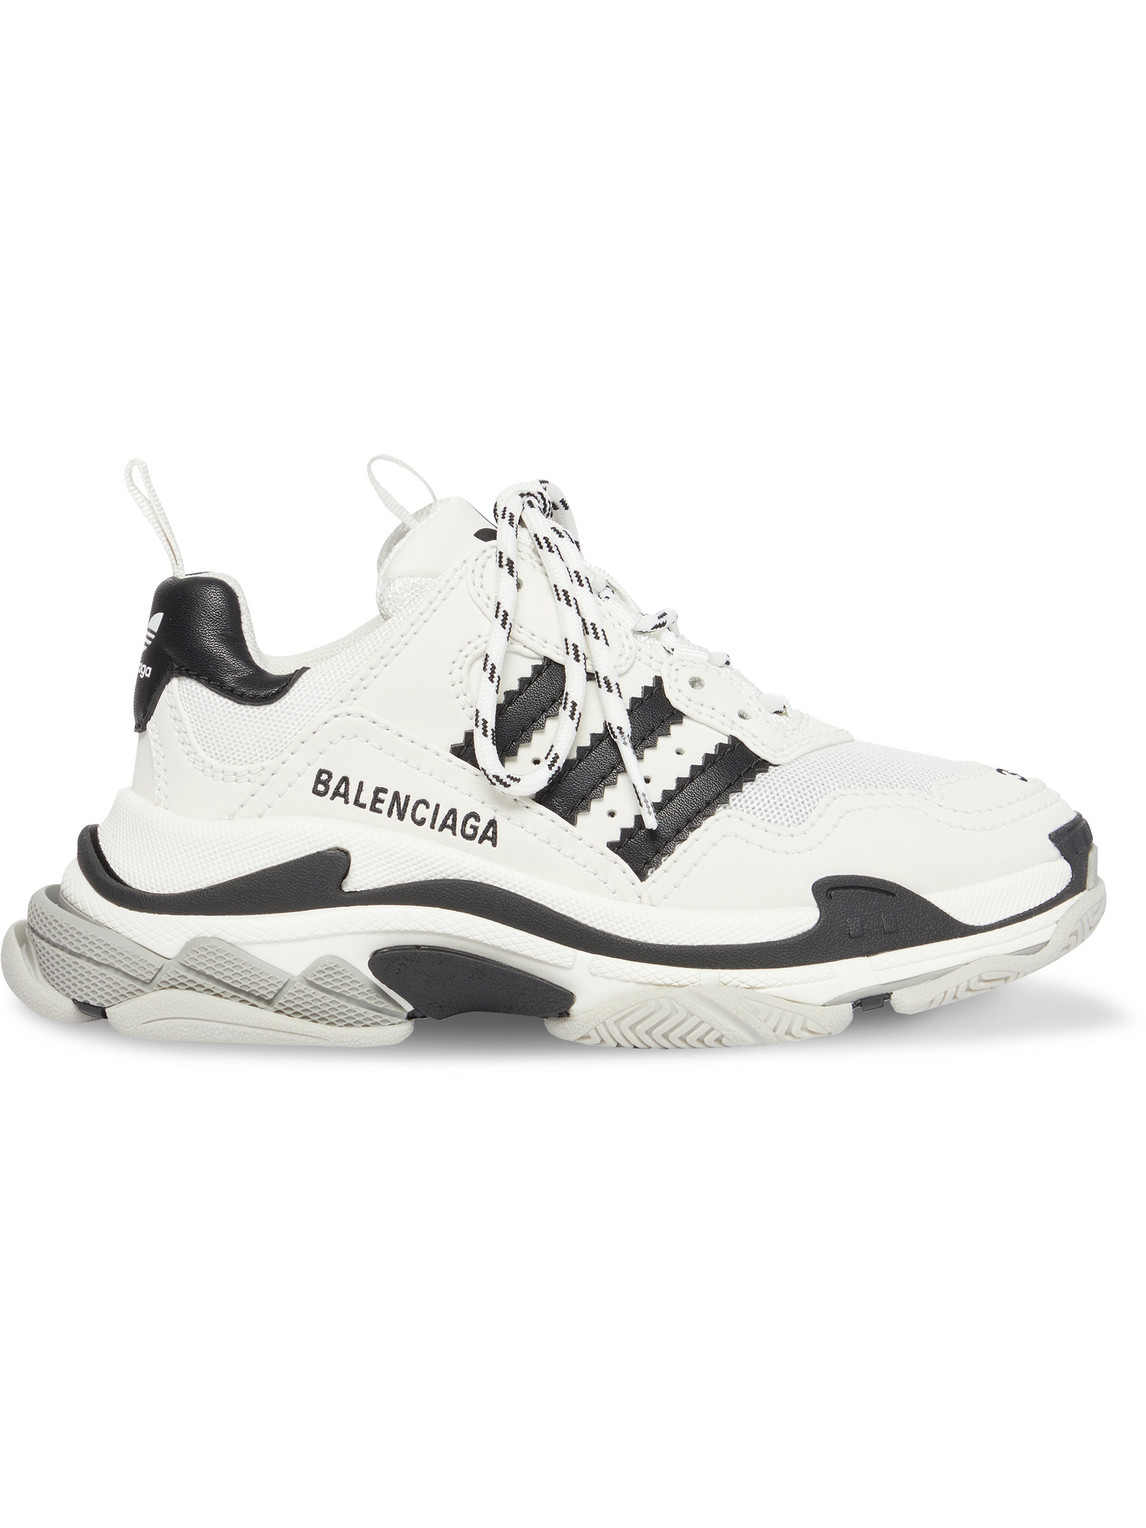 Balenciaga - adidas Triple S Leather and Mesh Sneakers - Men - White - EU 40